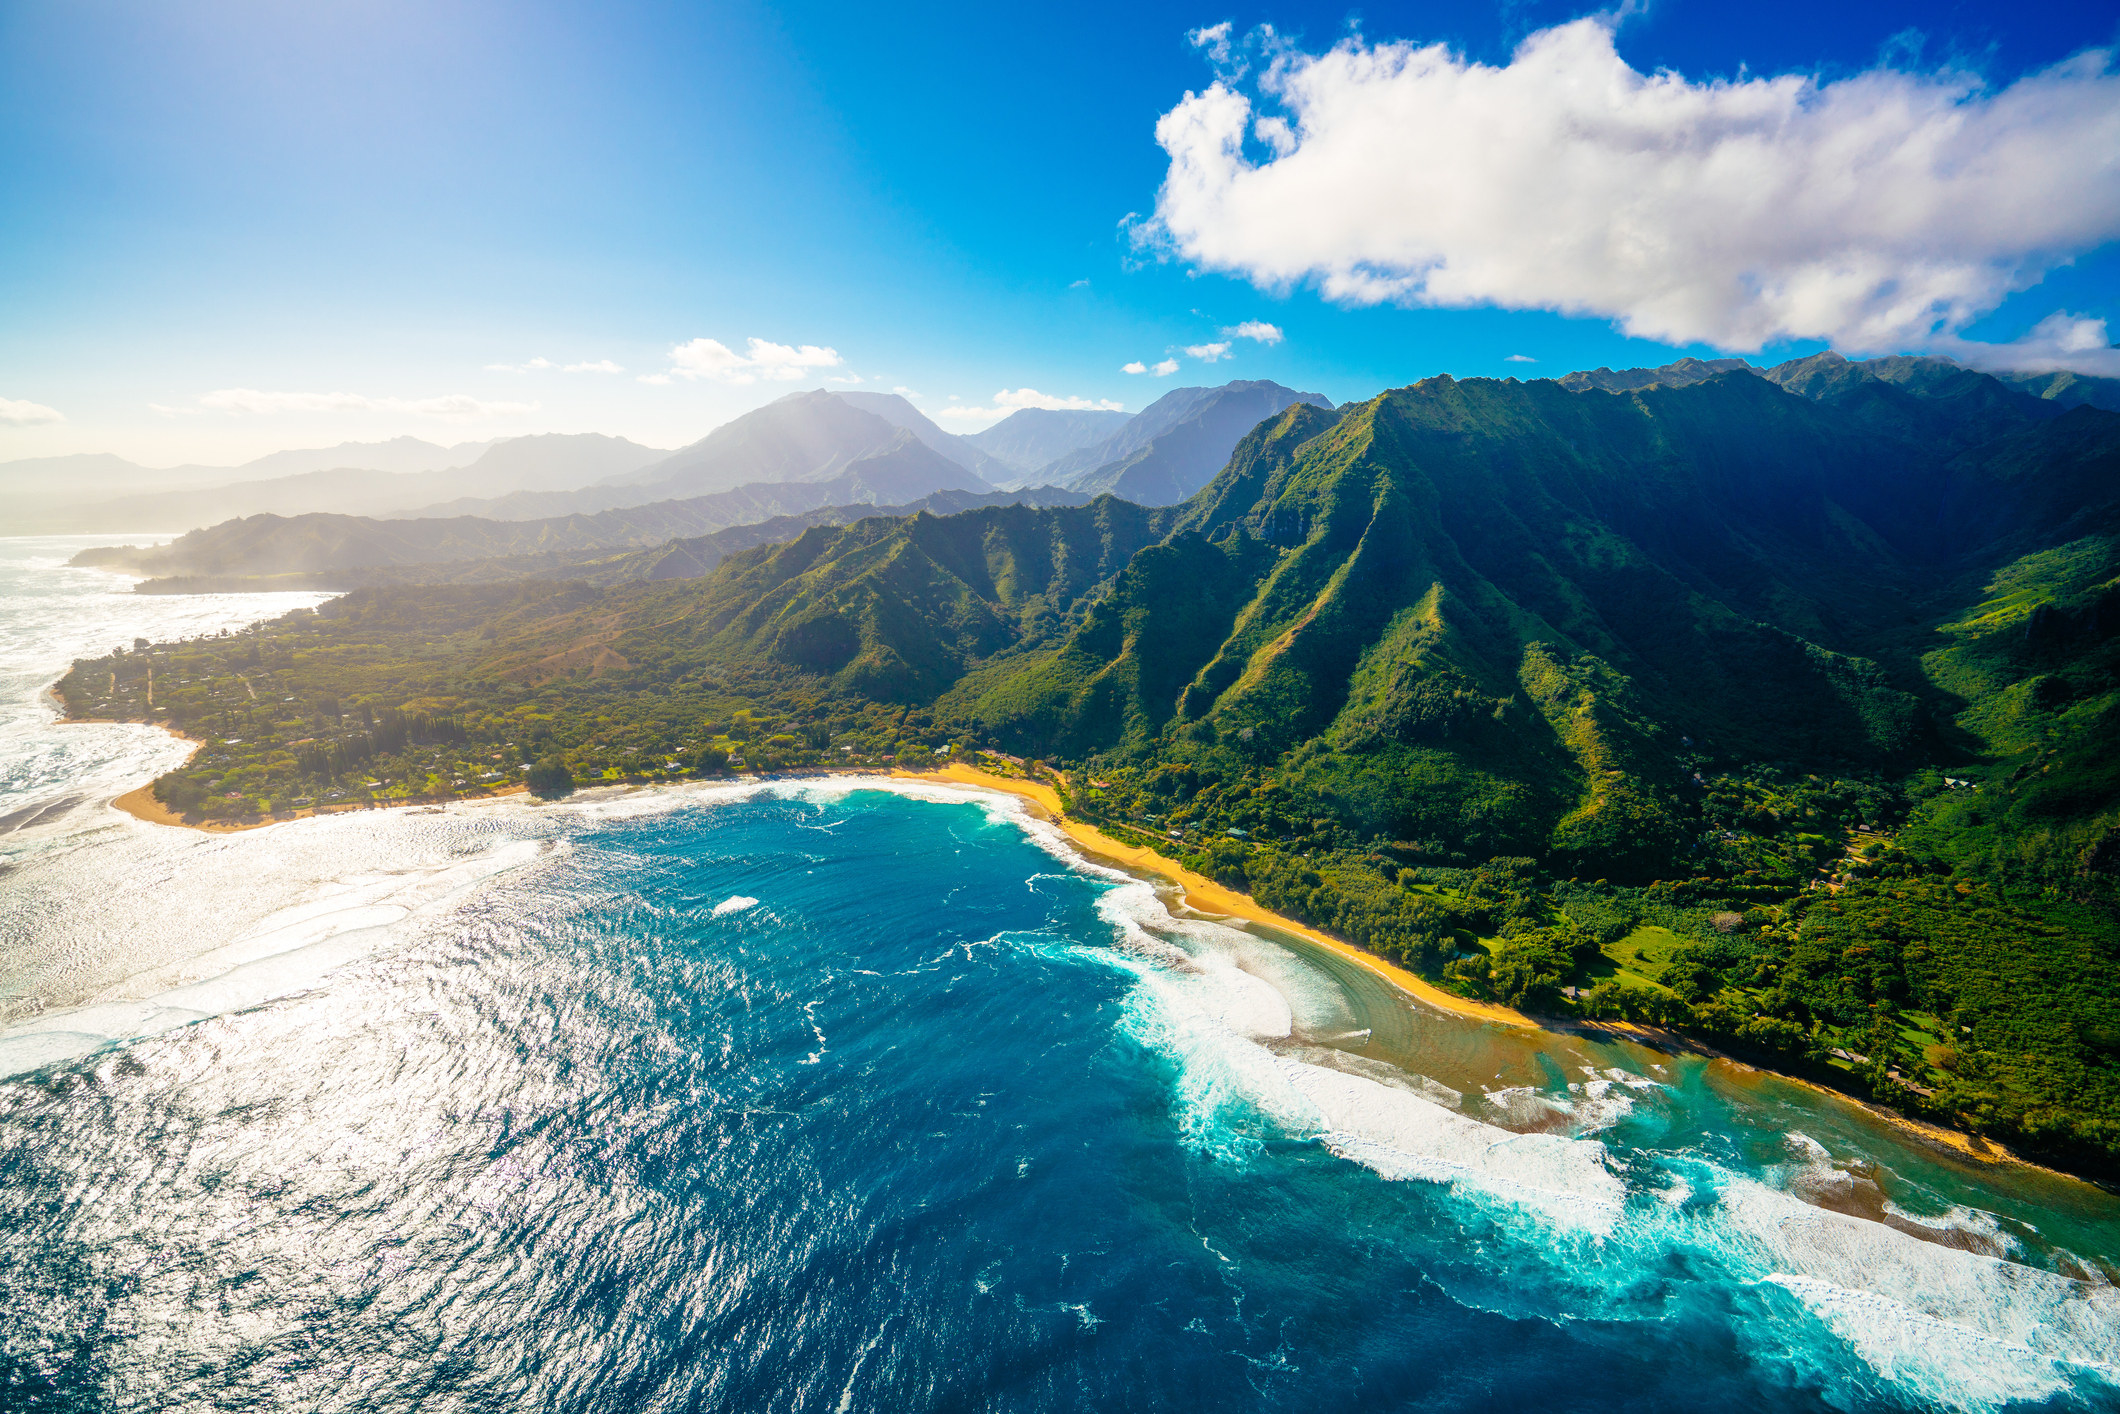 Aerial view of mountains and sea in Kauai.